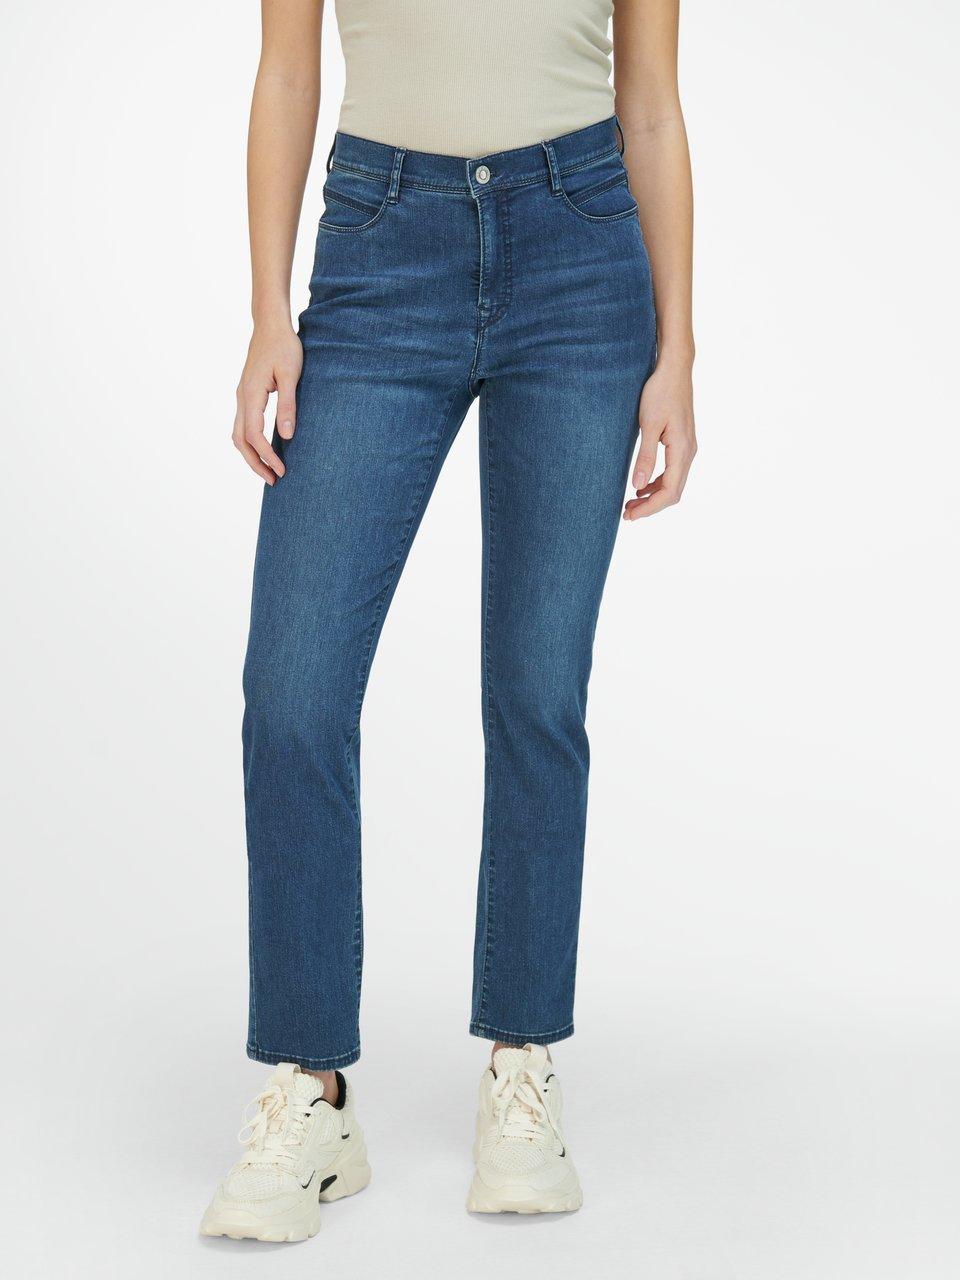 formeel Lounge schipper Brax Feel Good - Slim Fit-jeans model Mary - blue-denim